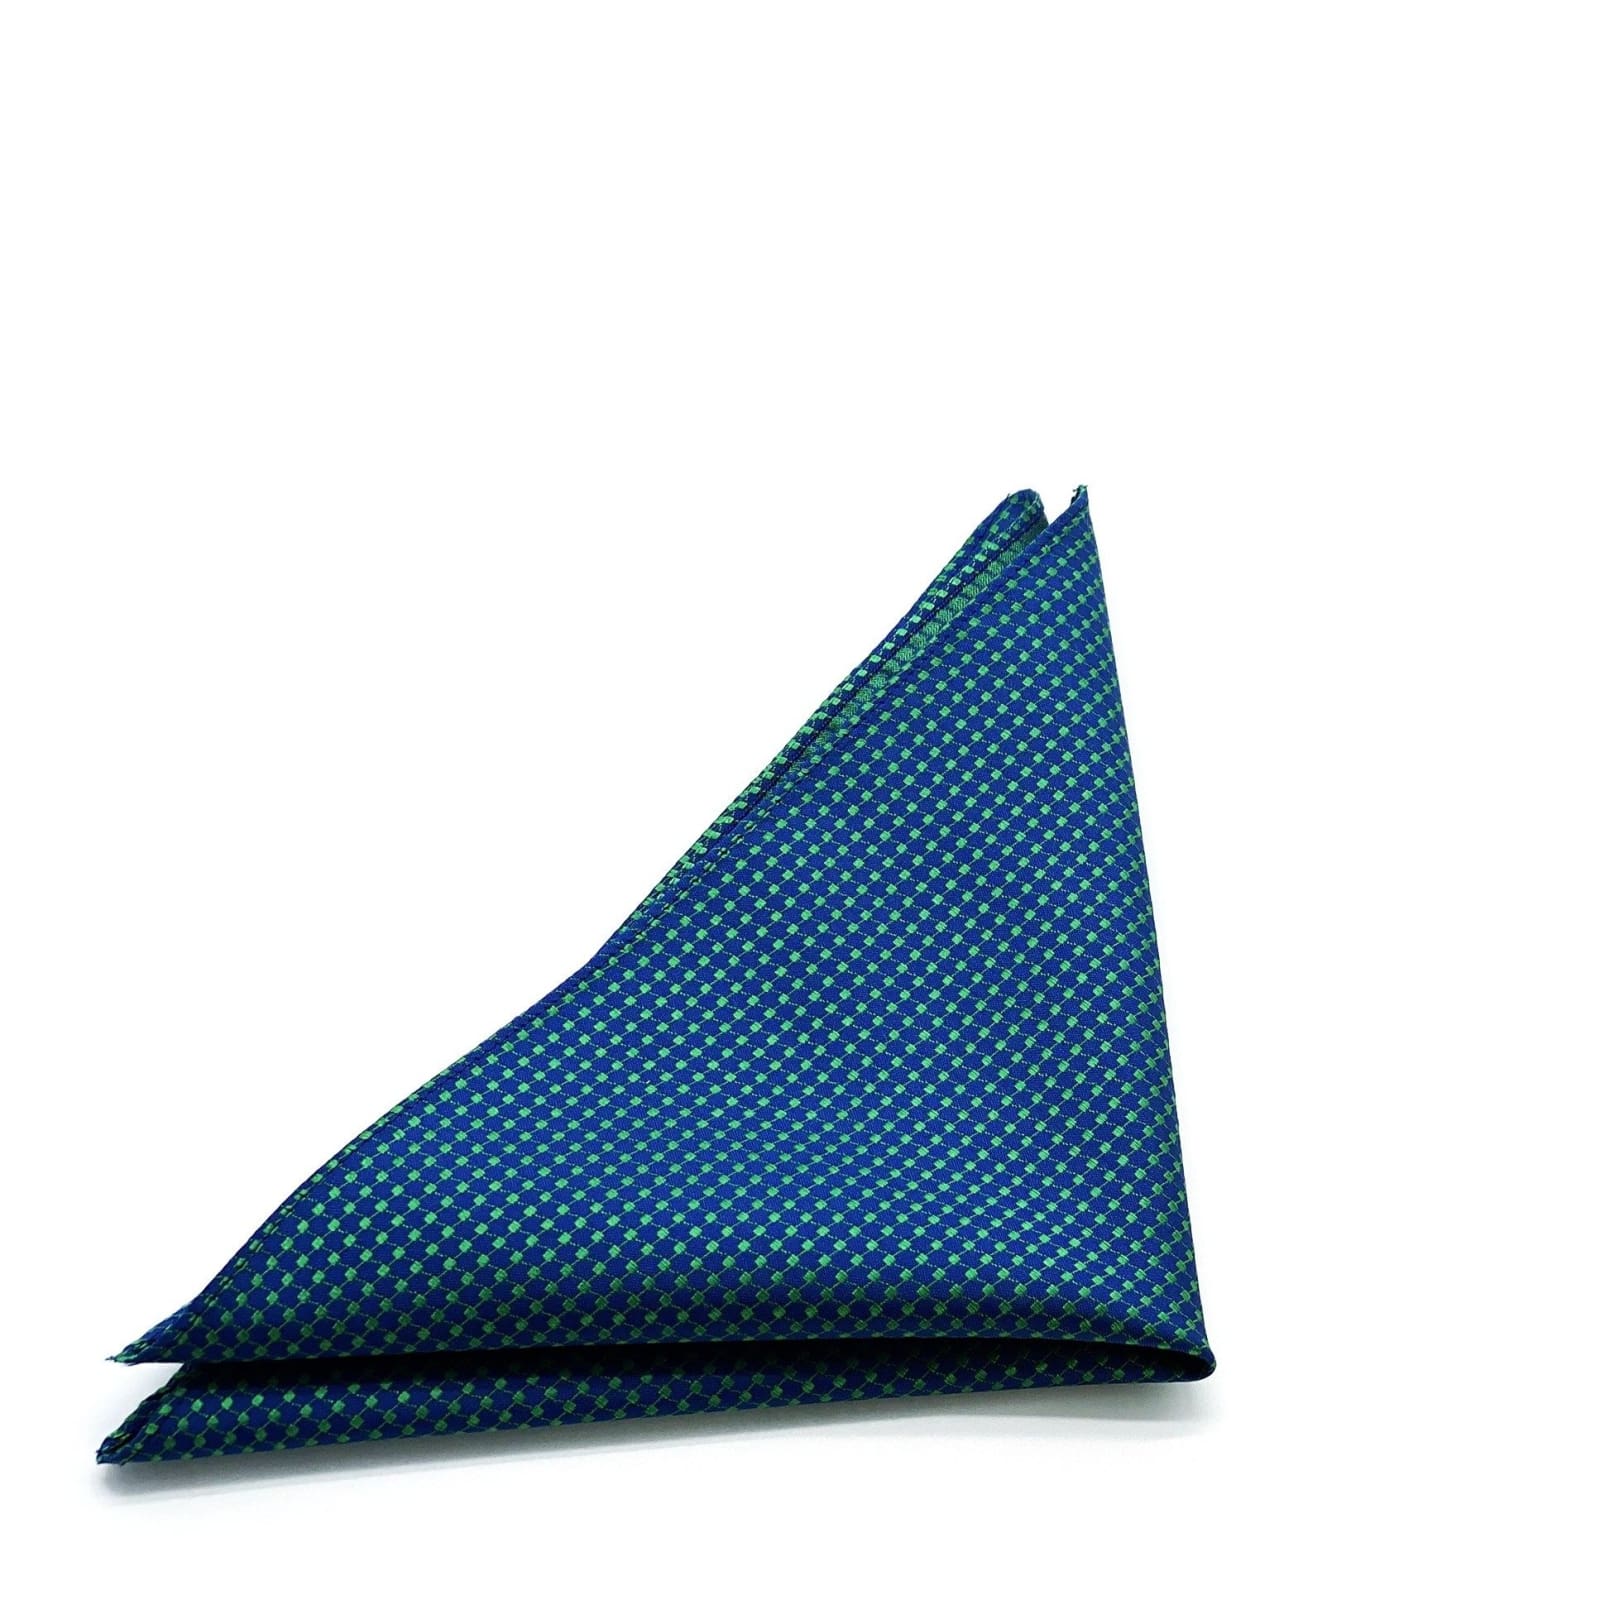 BERLIN BOW handkerchief - 2079 green - blue - accessories